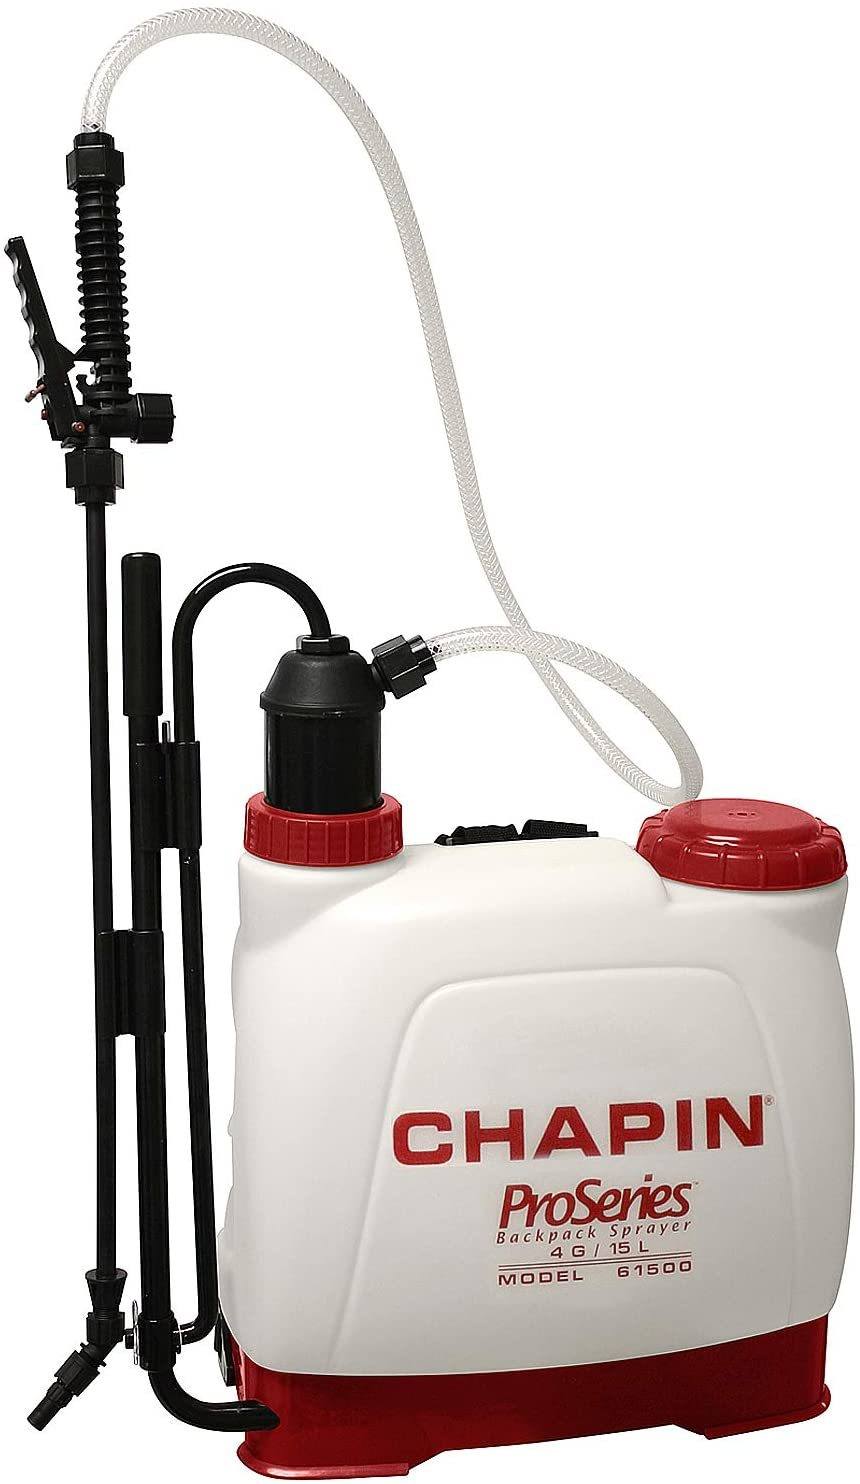 chapin international backpack sprayer image